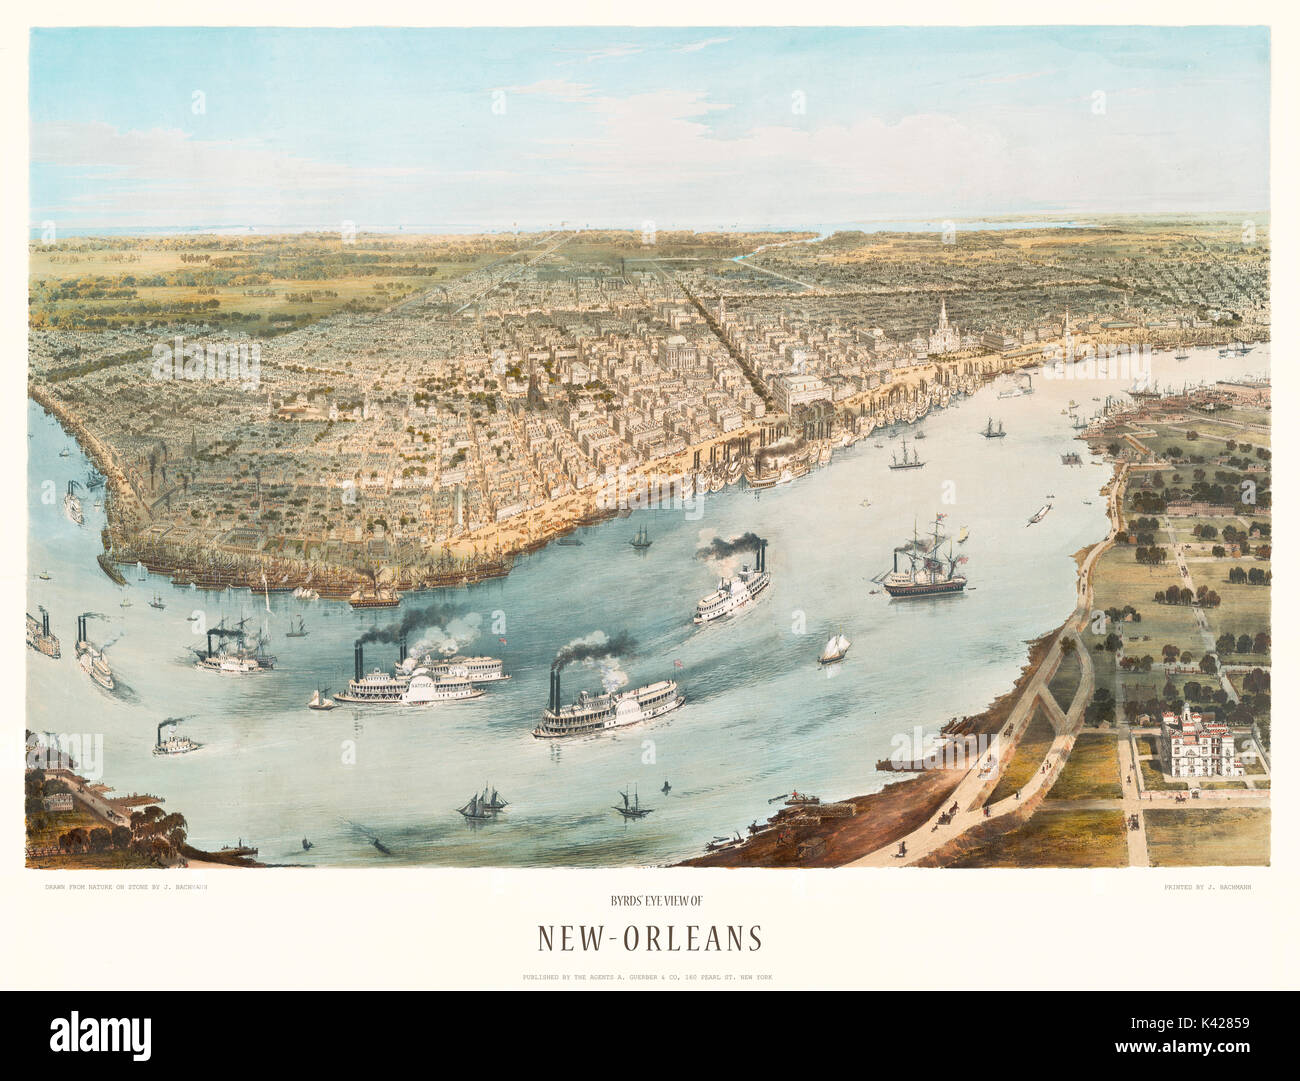 Alte Luftaufnahme von New Orleans, Louisiana. Von John Bachmann, Publ. A. Guerber & Co., 1851 Stockfoto